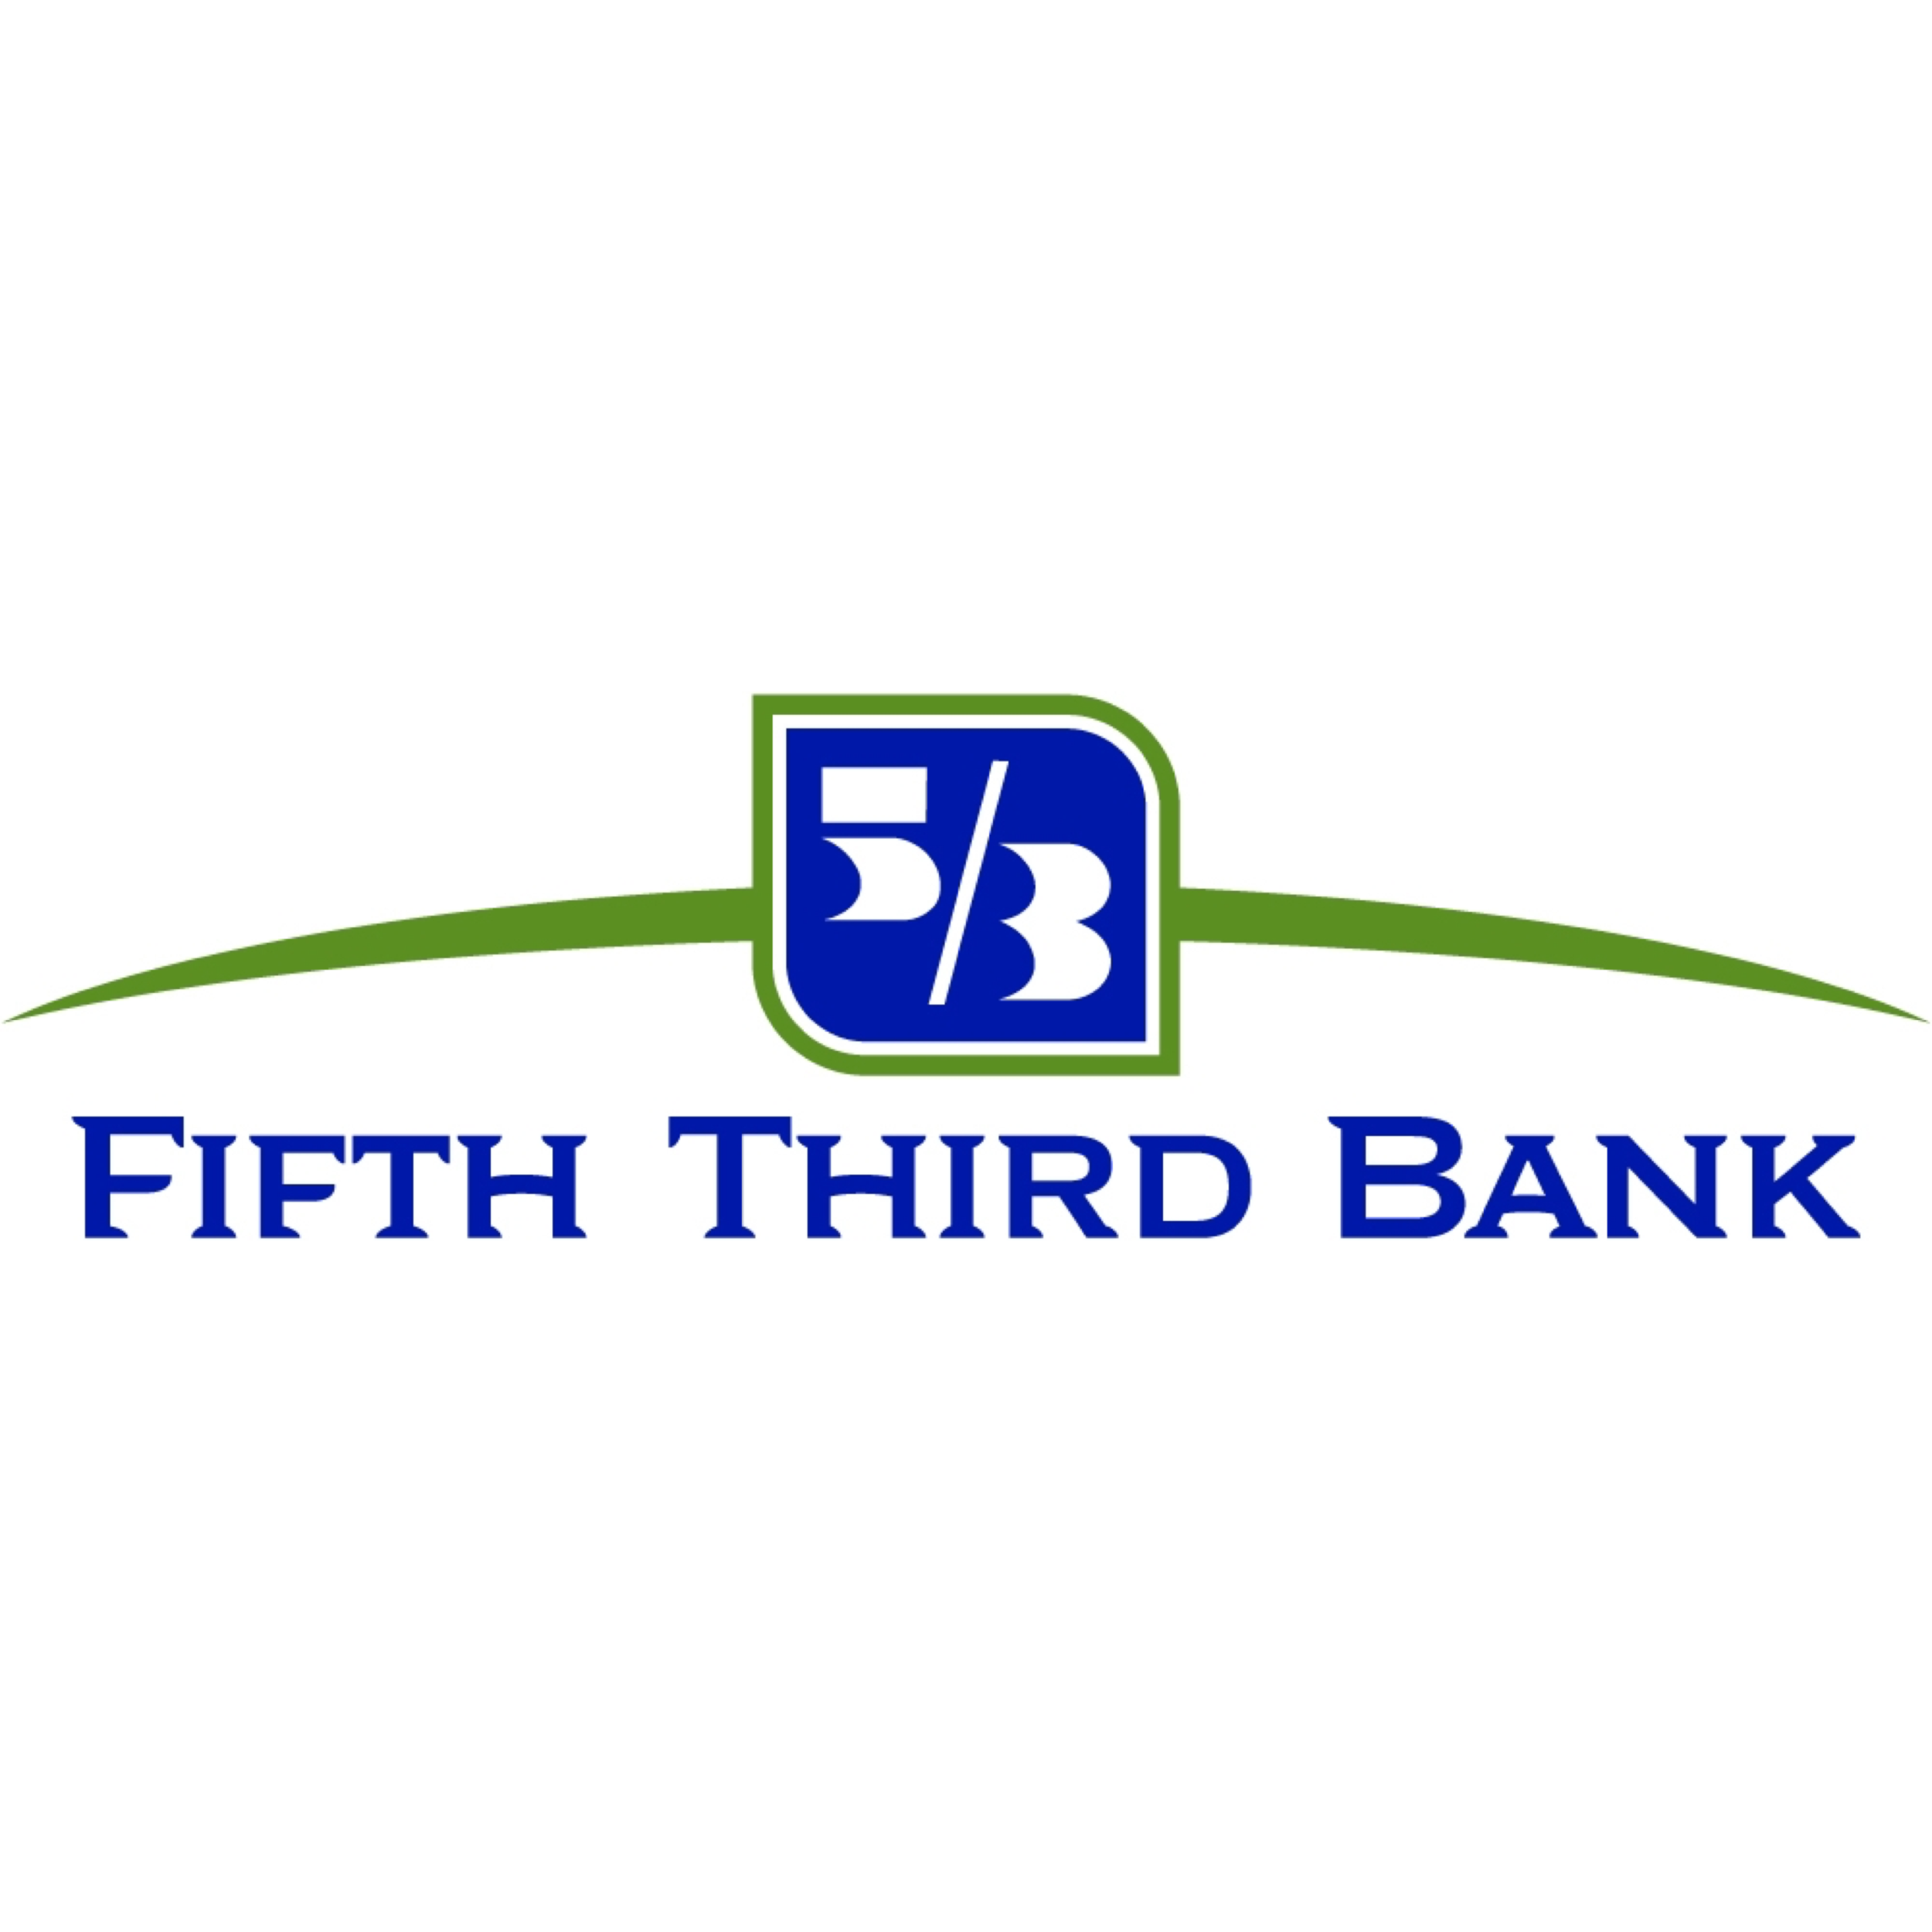 FIFTH THIRD BANK